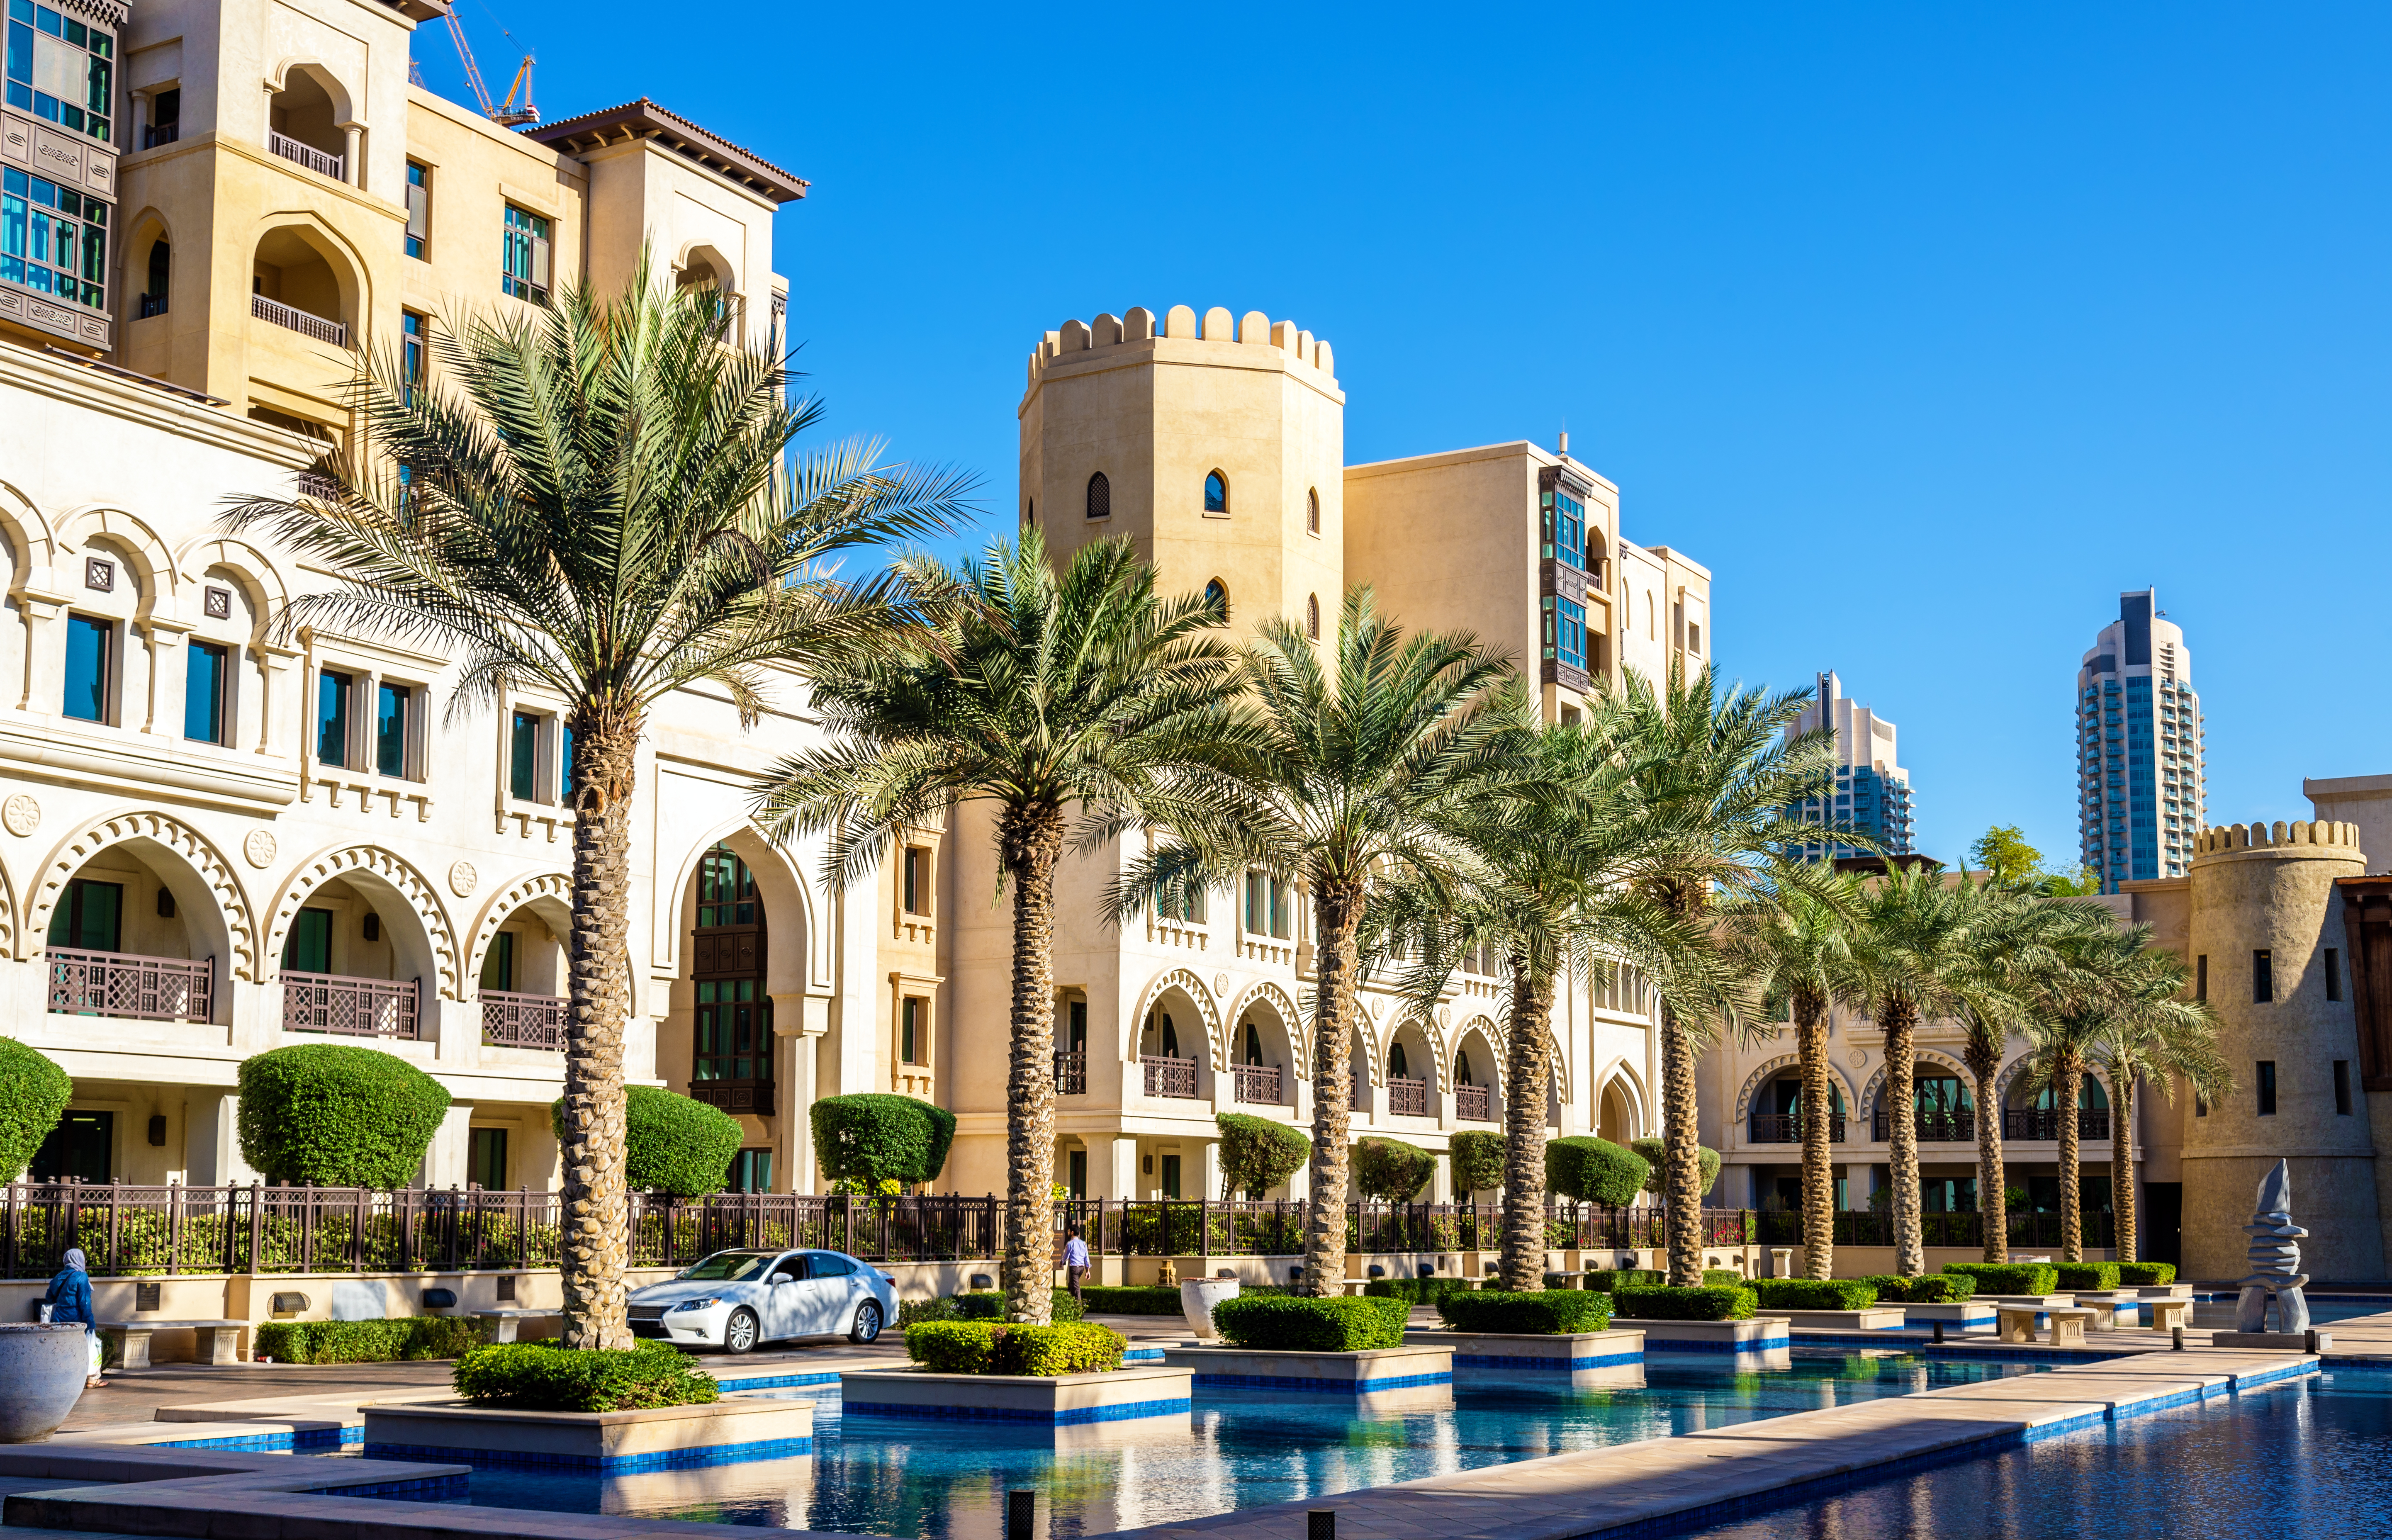 Dubai’s hoteliers continue momentum after stellar 2022 performance